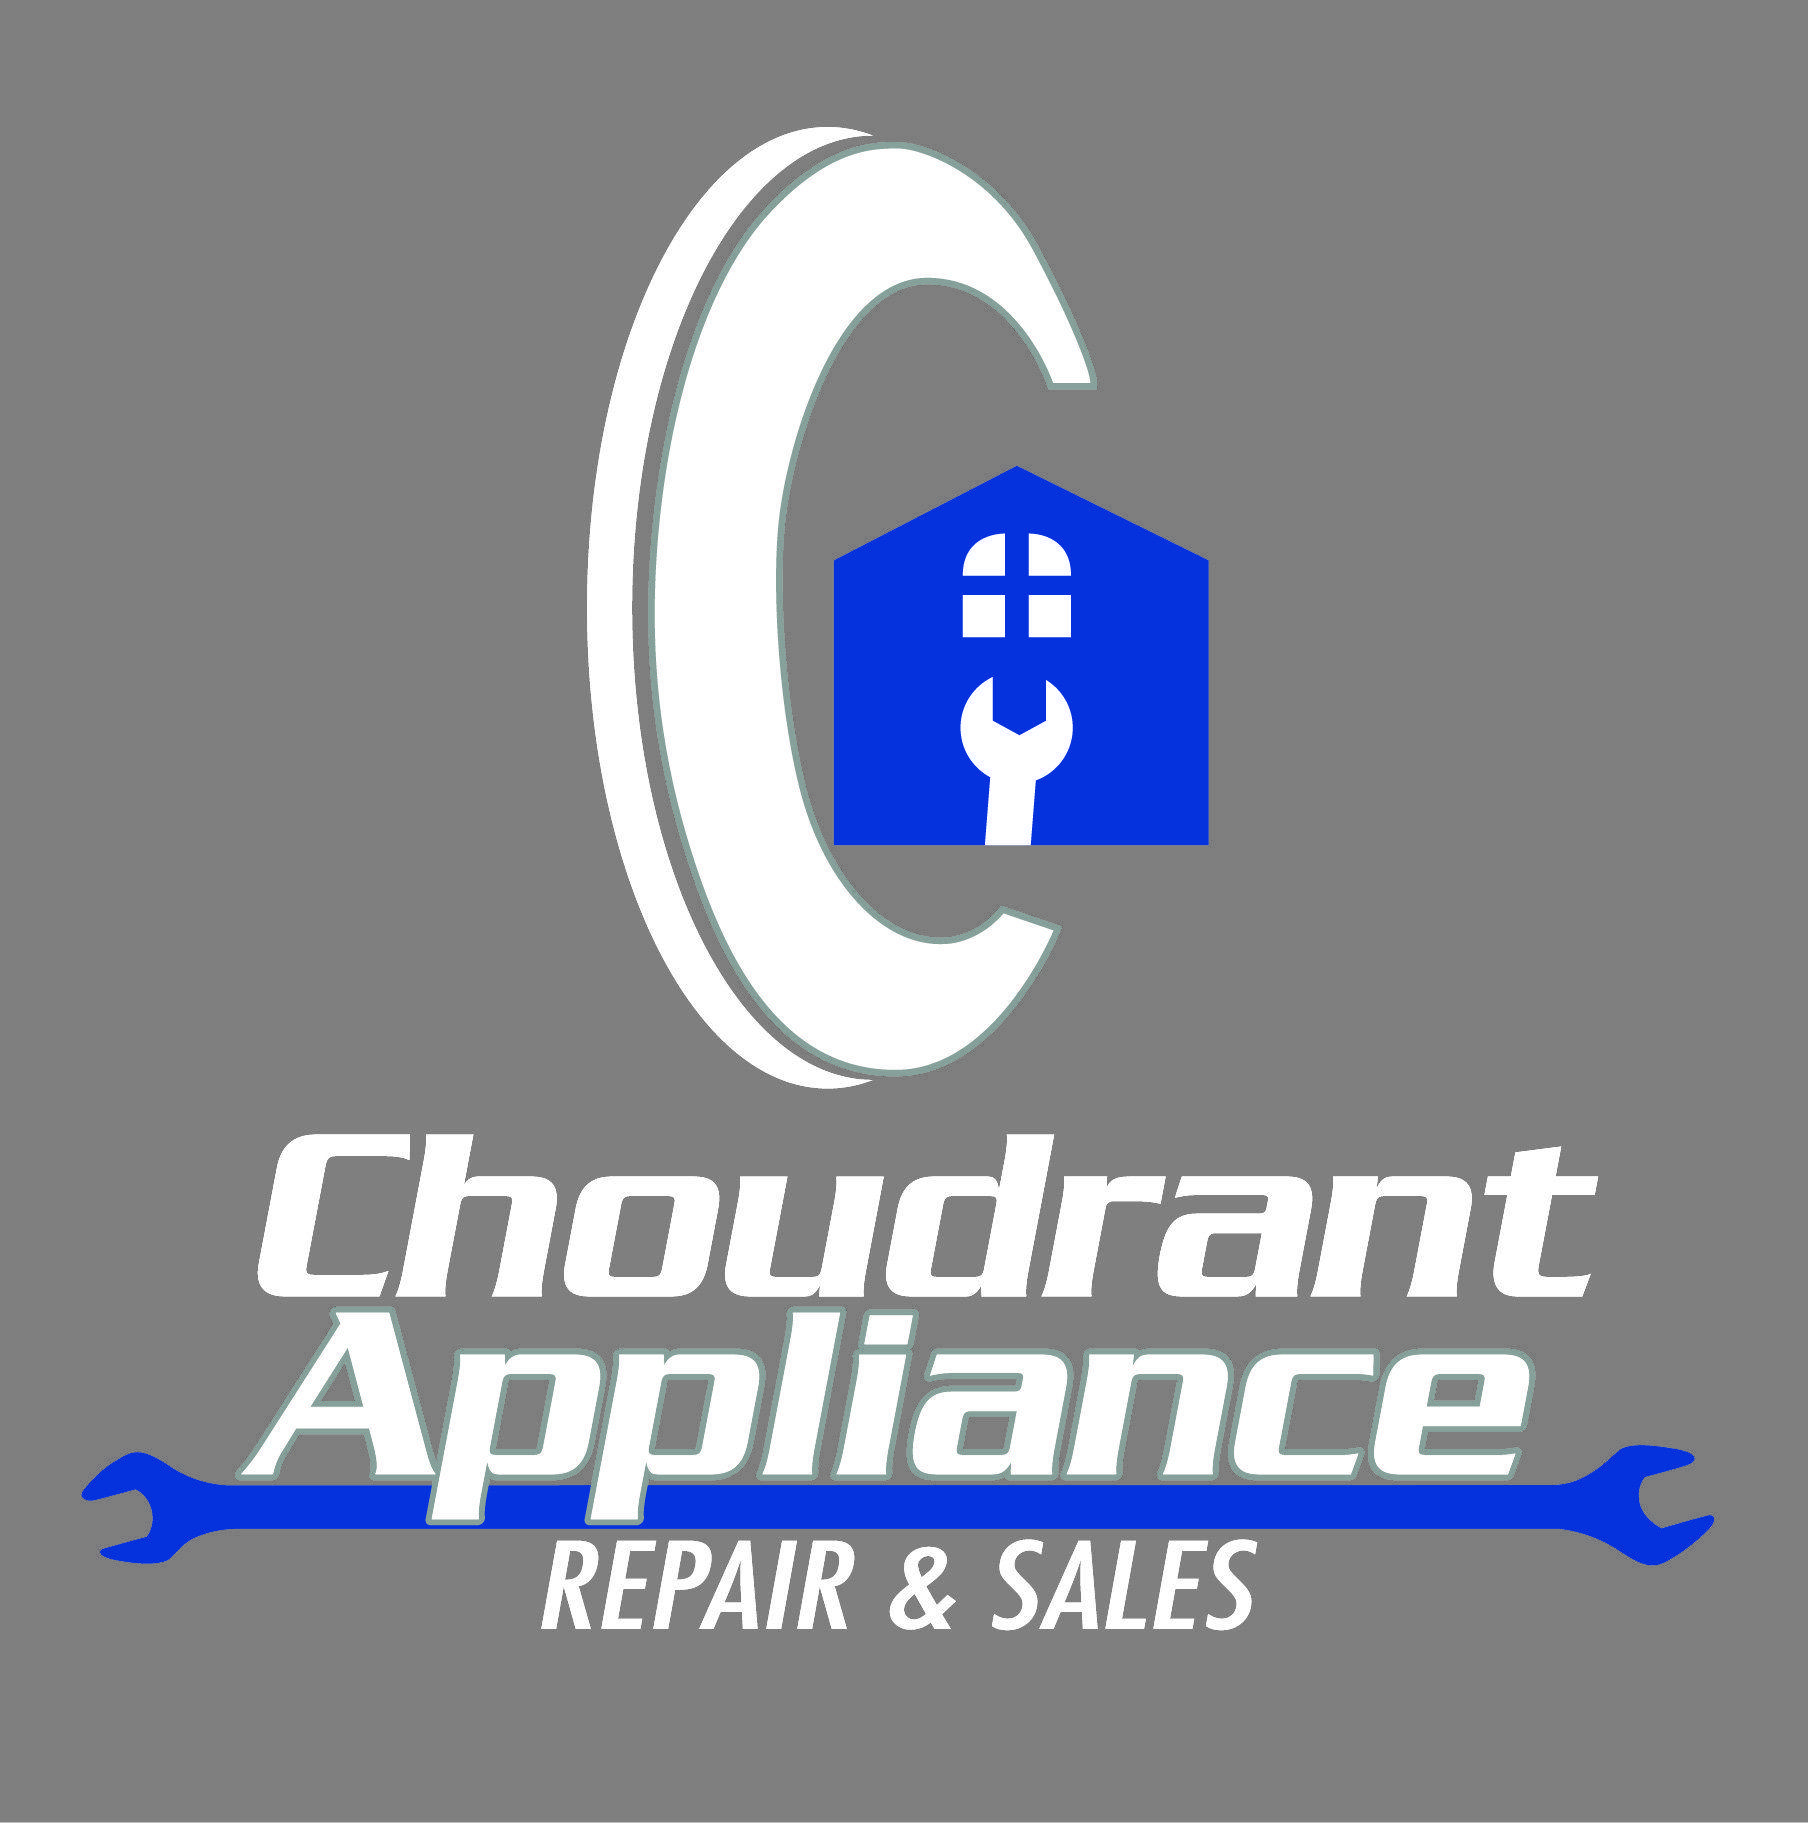 Apliance Logo - Choudrant Appliance - Home